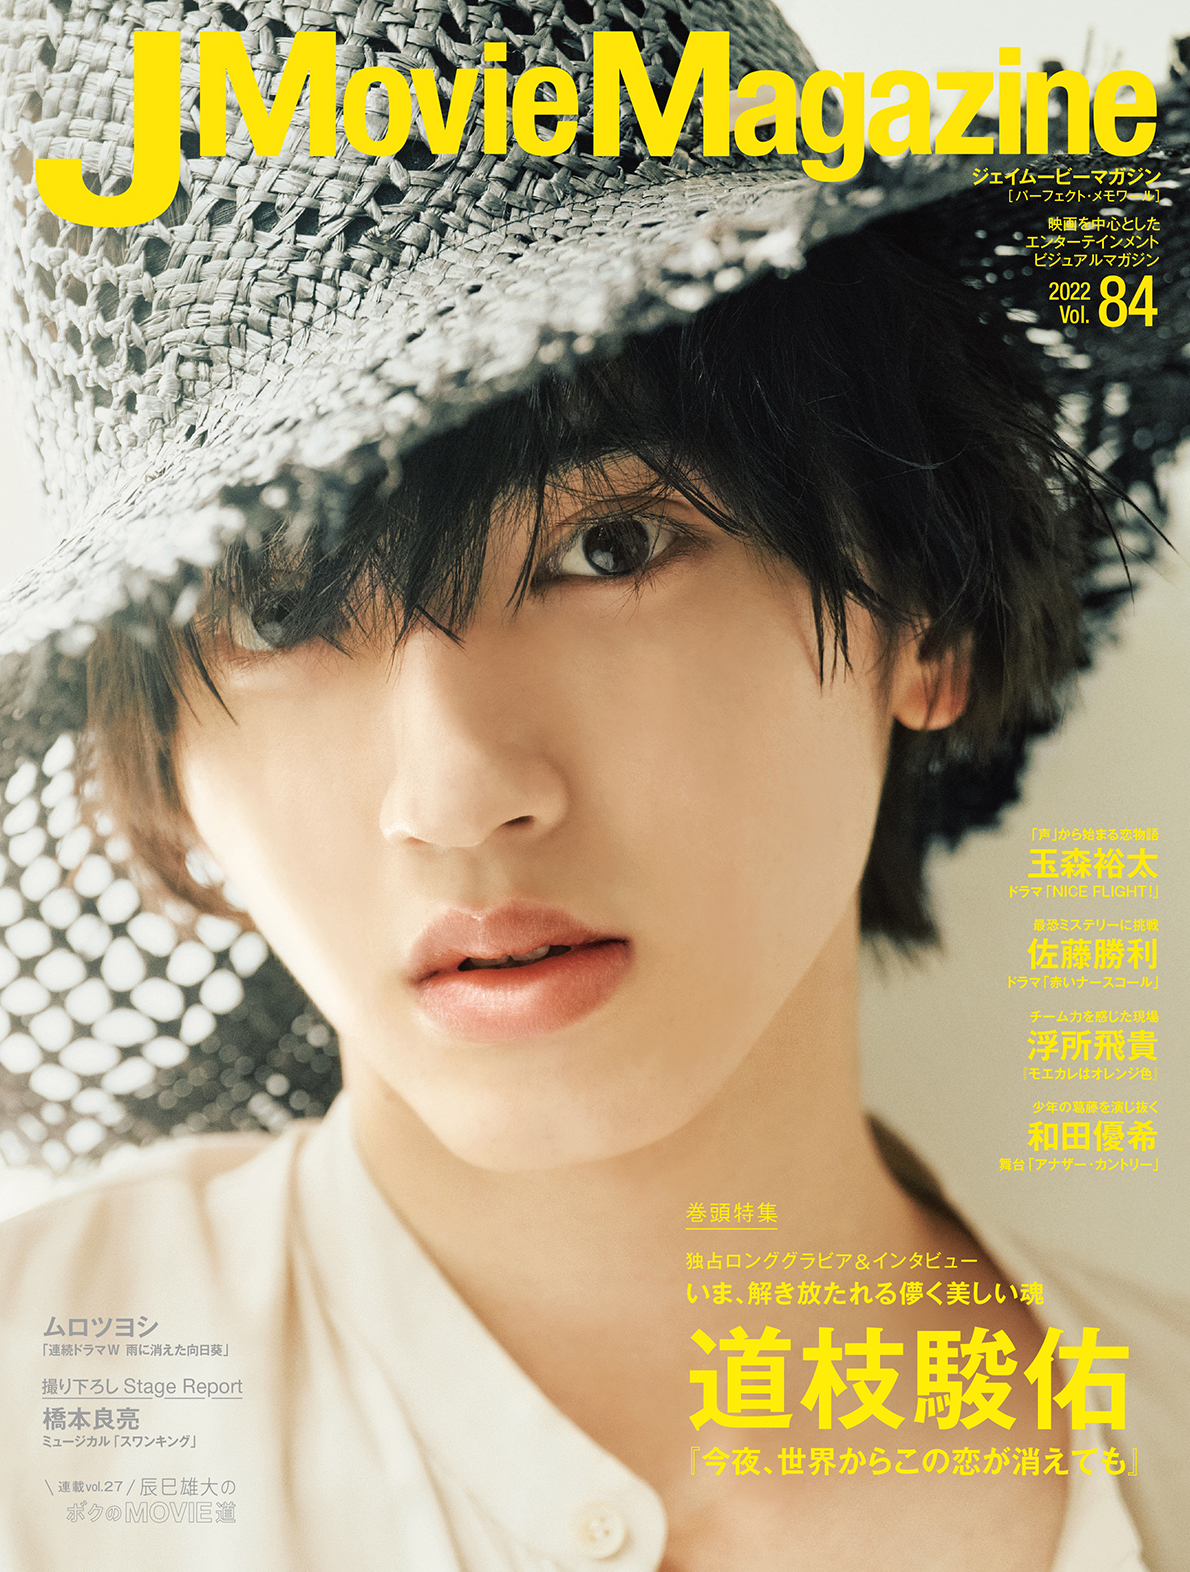 JMovieMagazine vol.08 ☆ - 雑誌